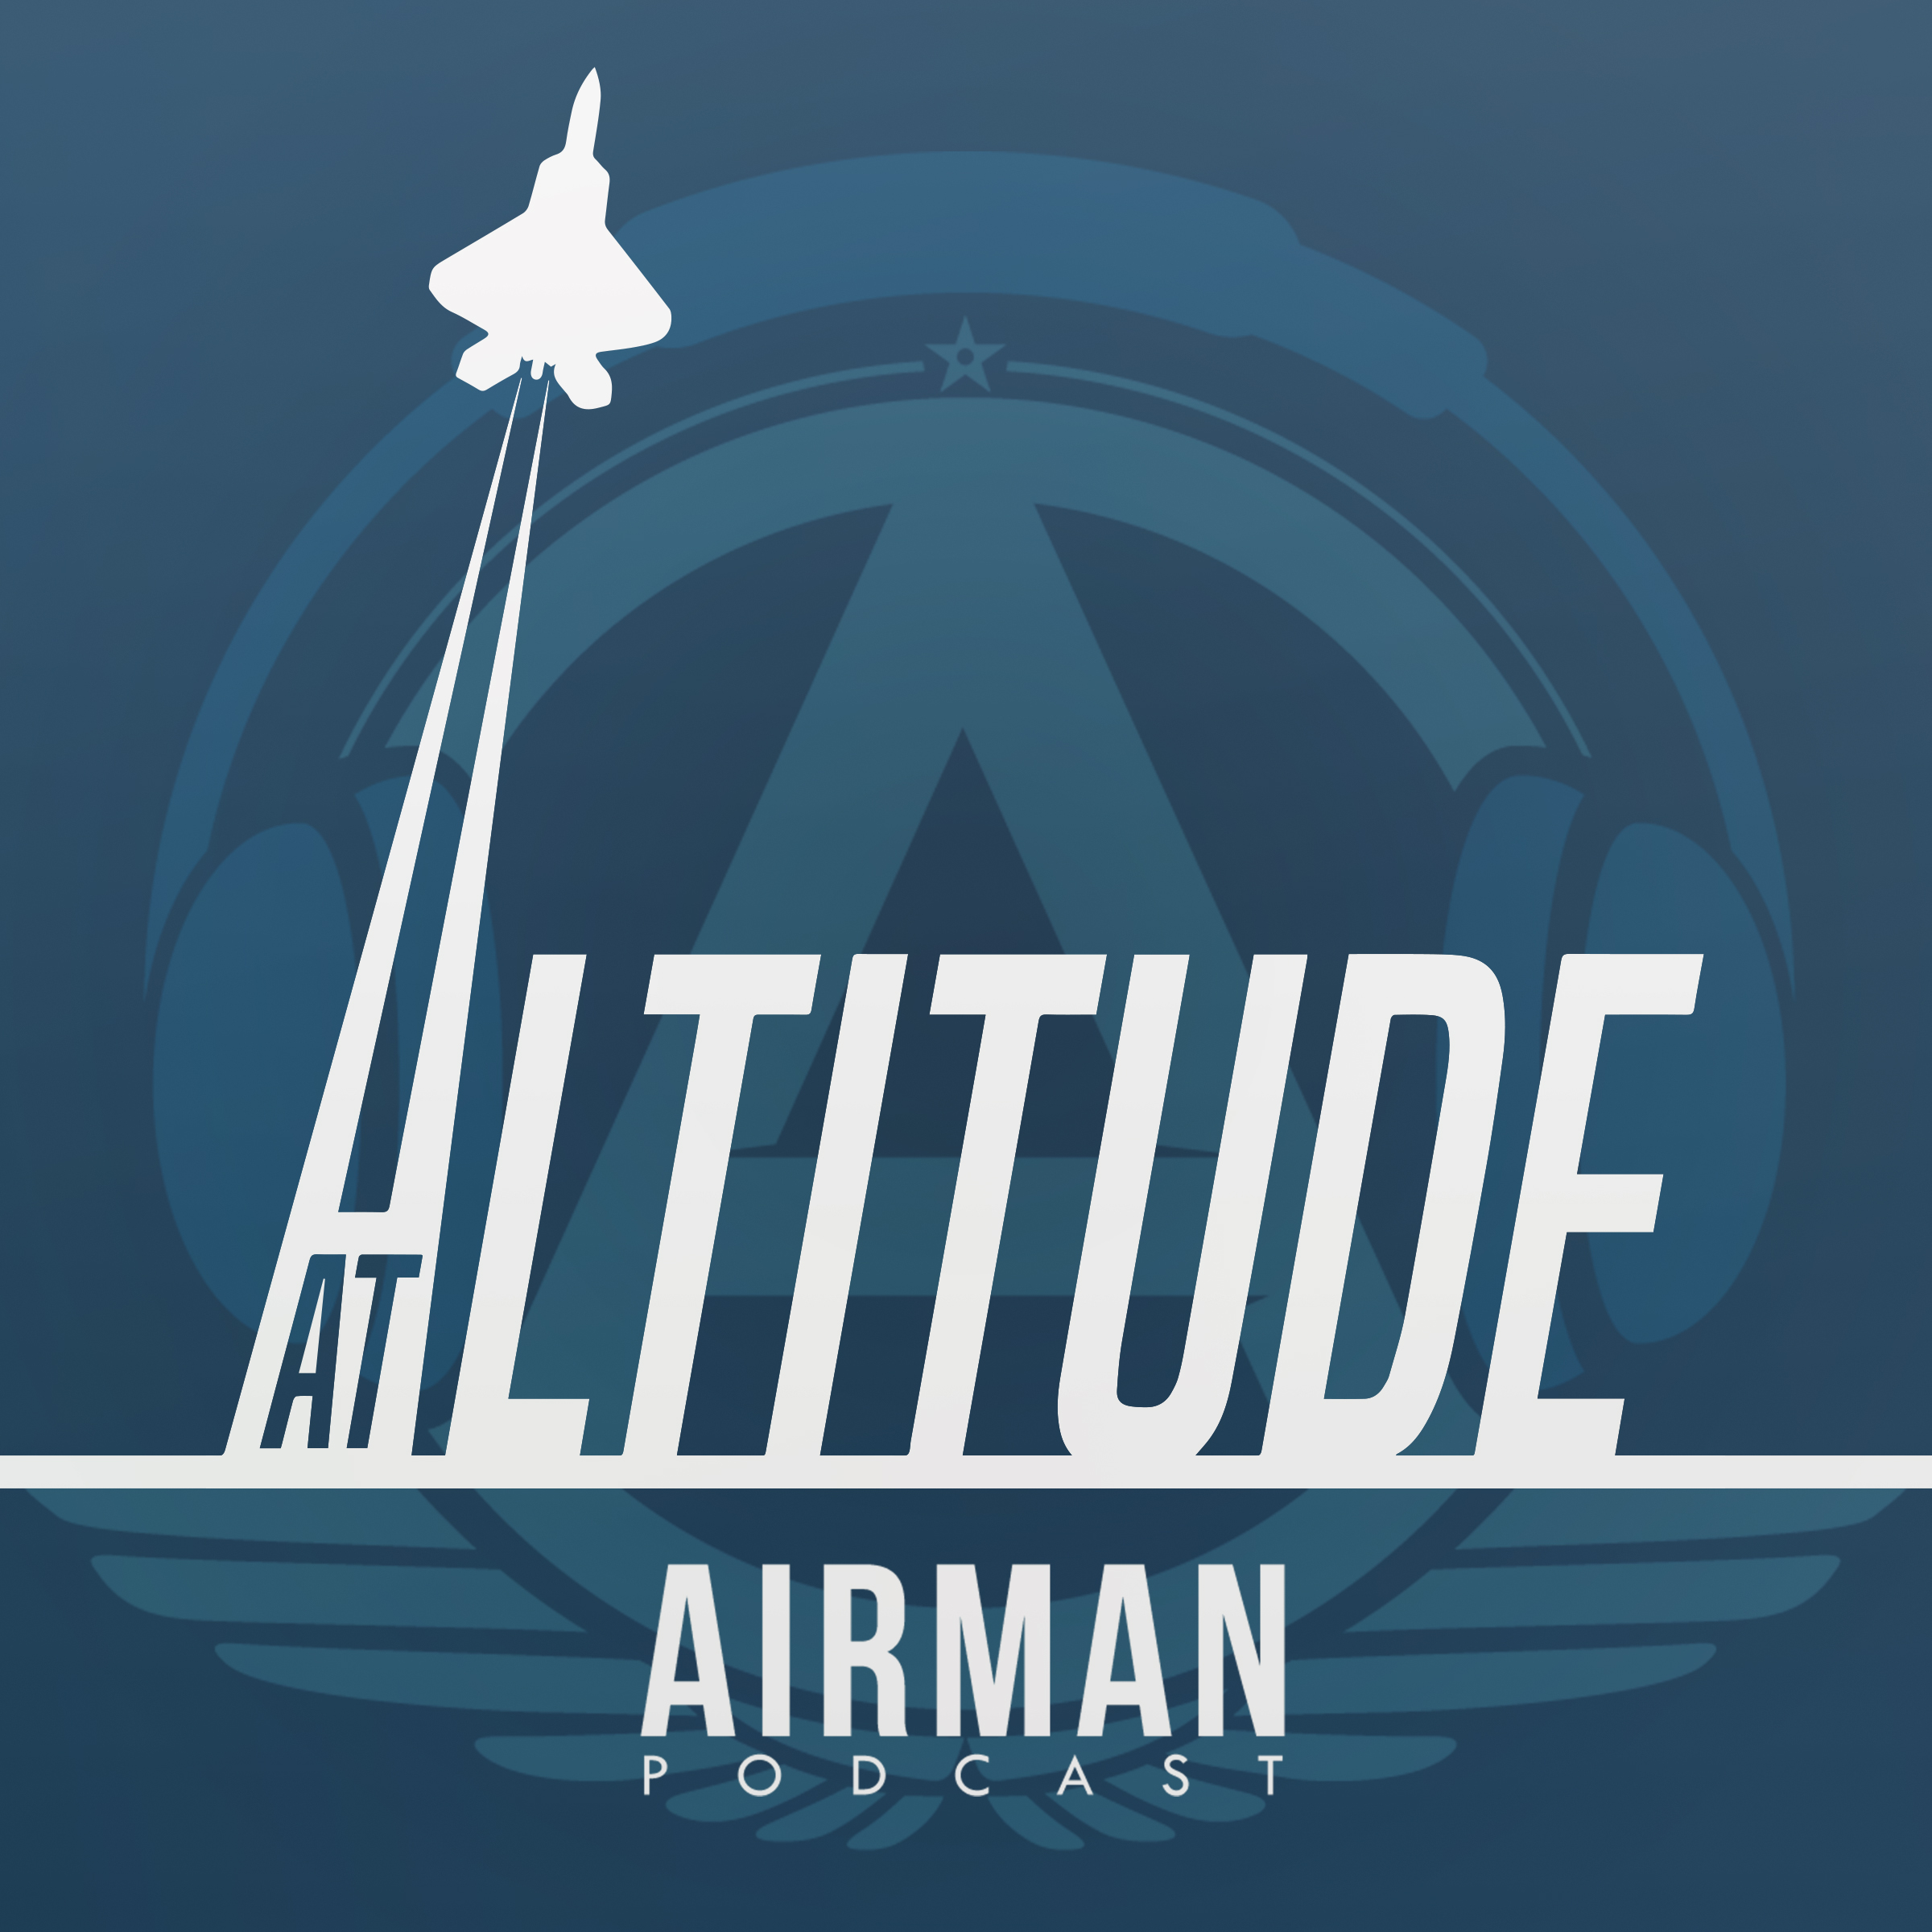 Airman Magazine Podcast: At Altitude